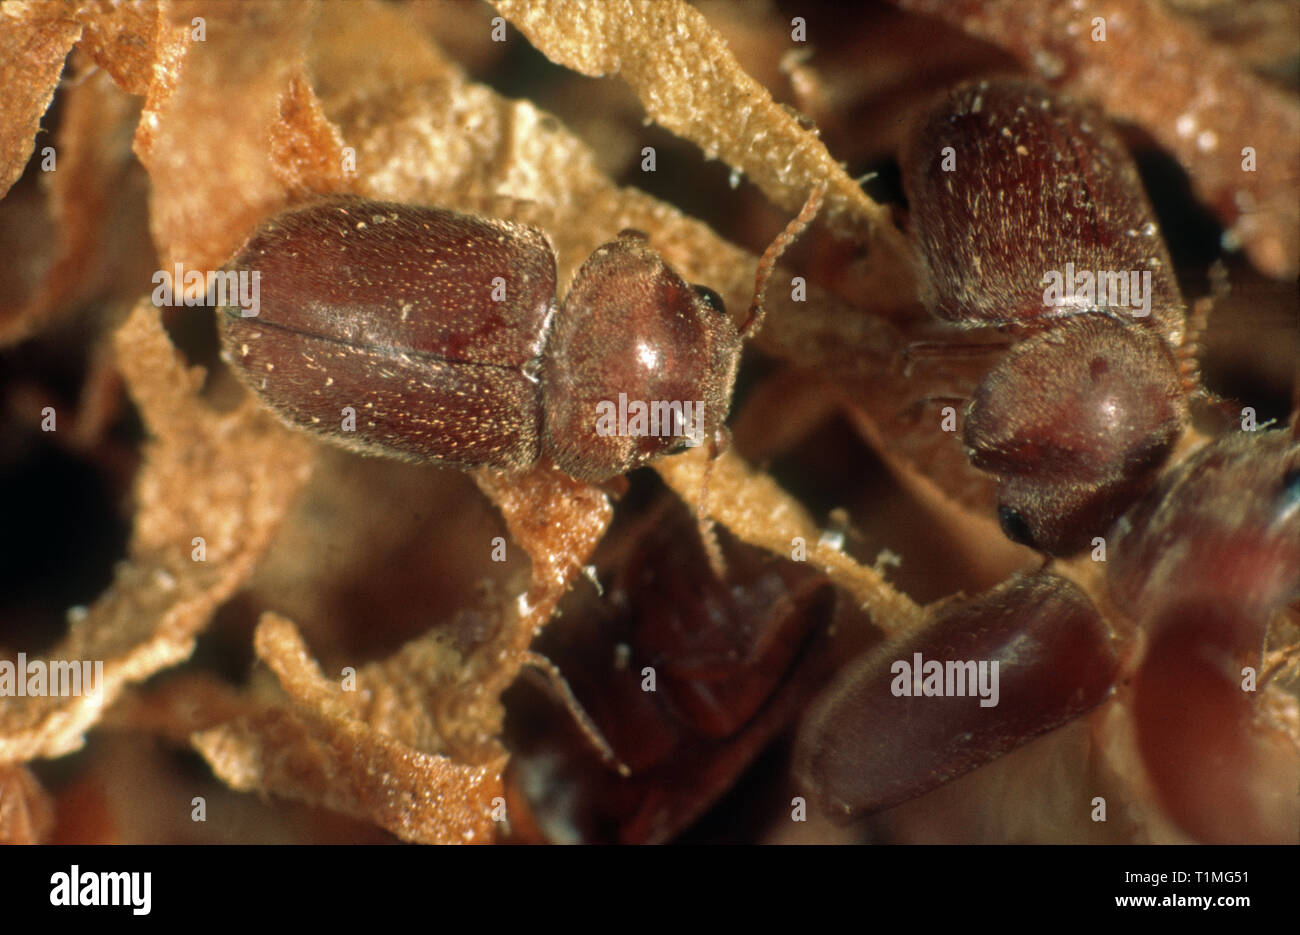 Cigarette or tobacco beetle (Lasioderma serricorne) stored product pest on cigarette tobacco Stock Photo